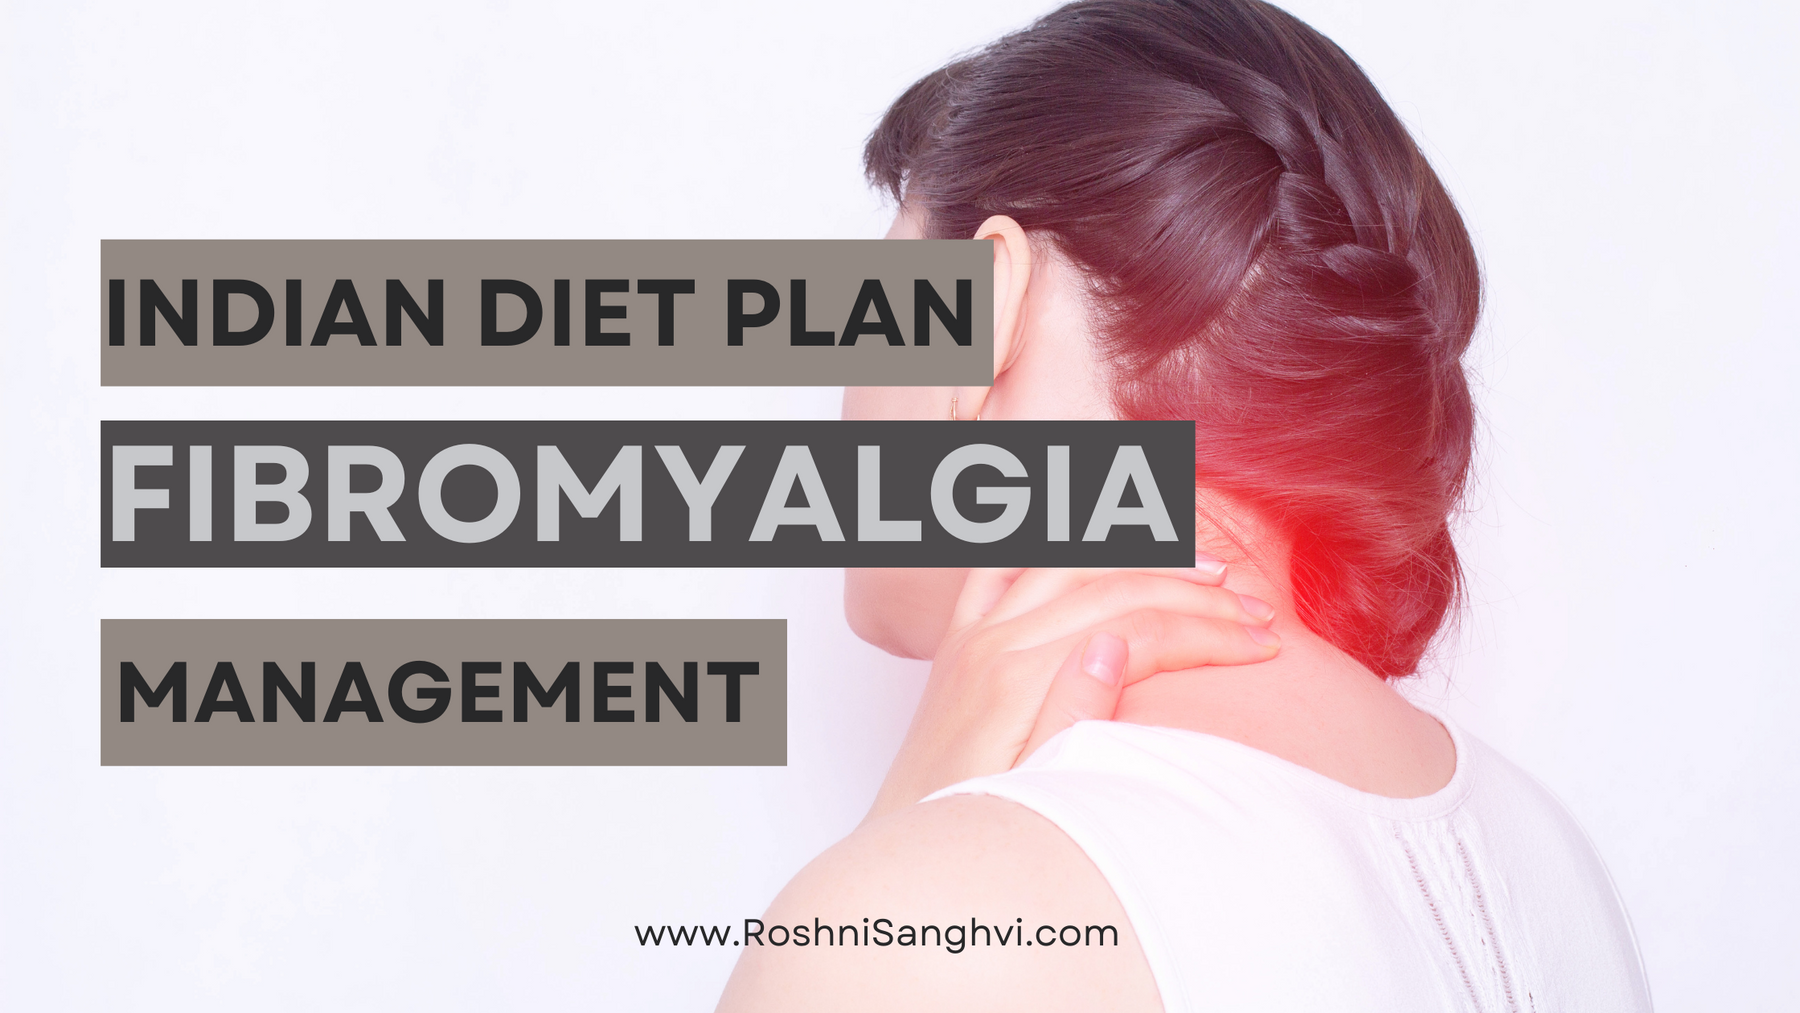 Indian Diet Plan For Fibromyalgia Management